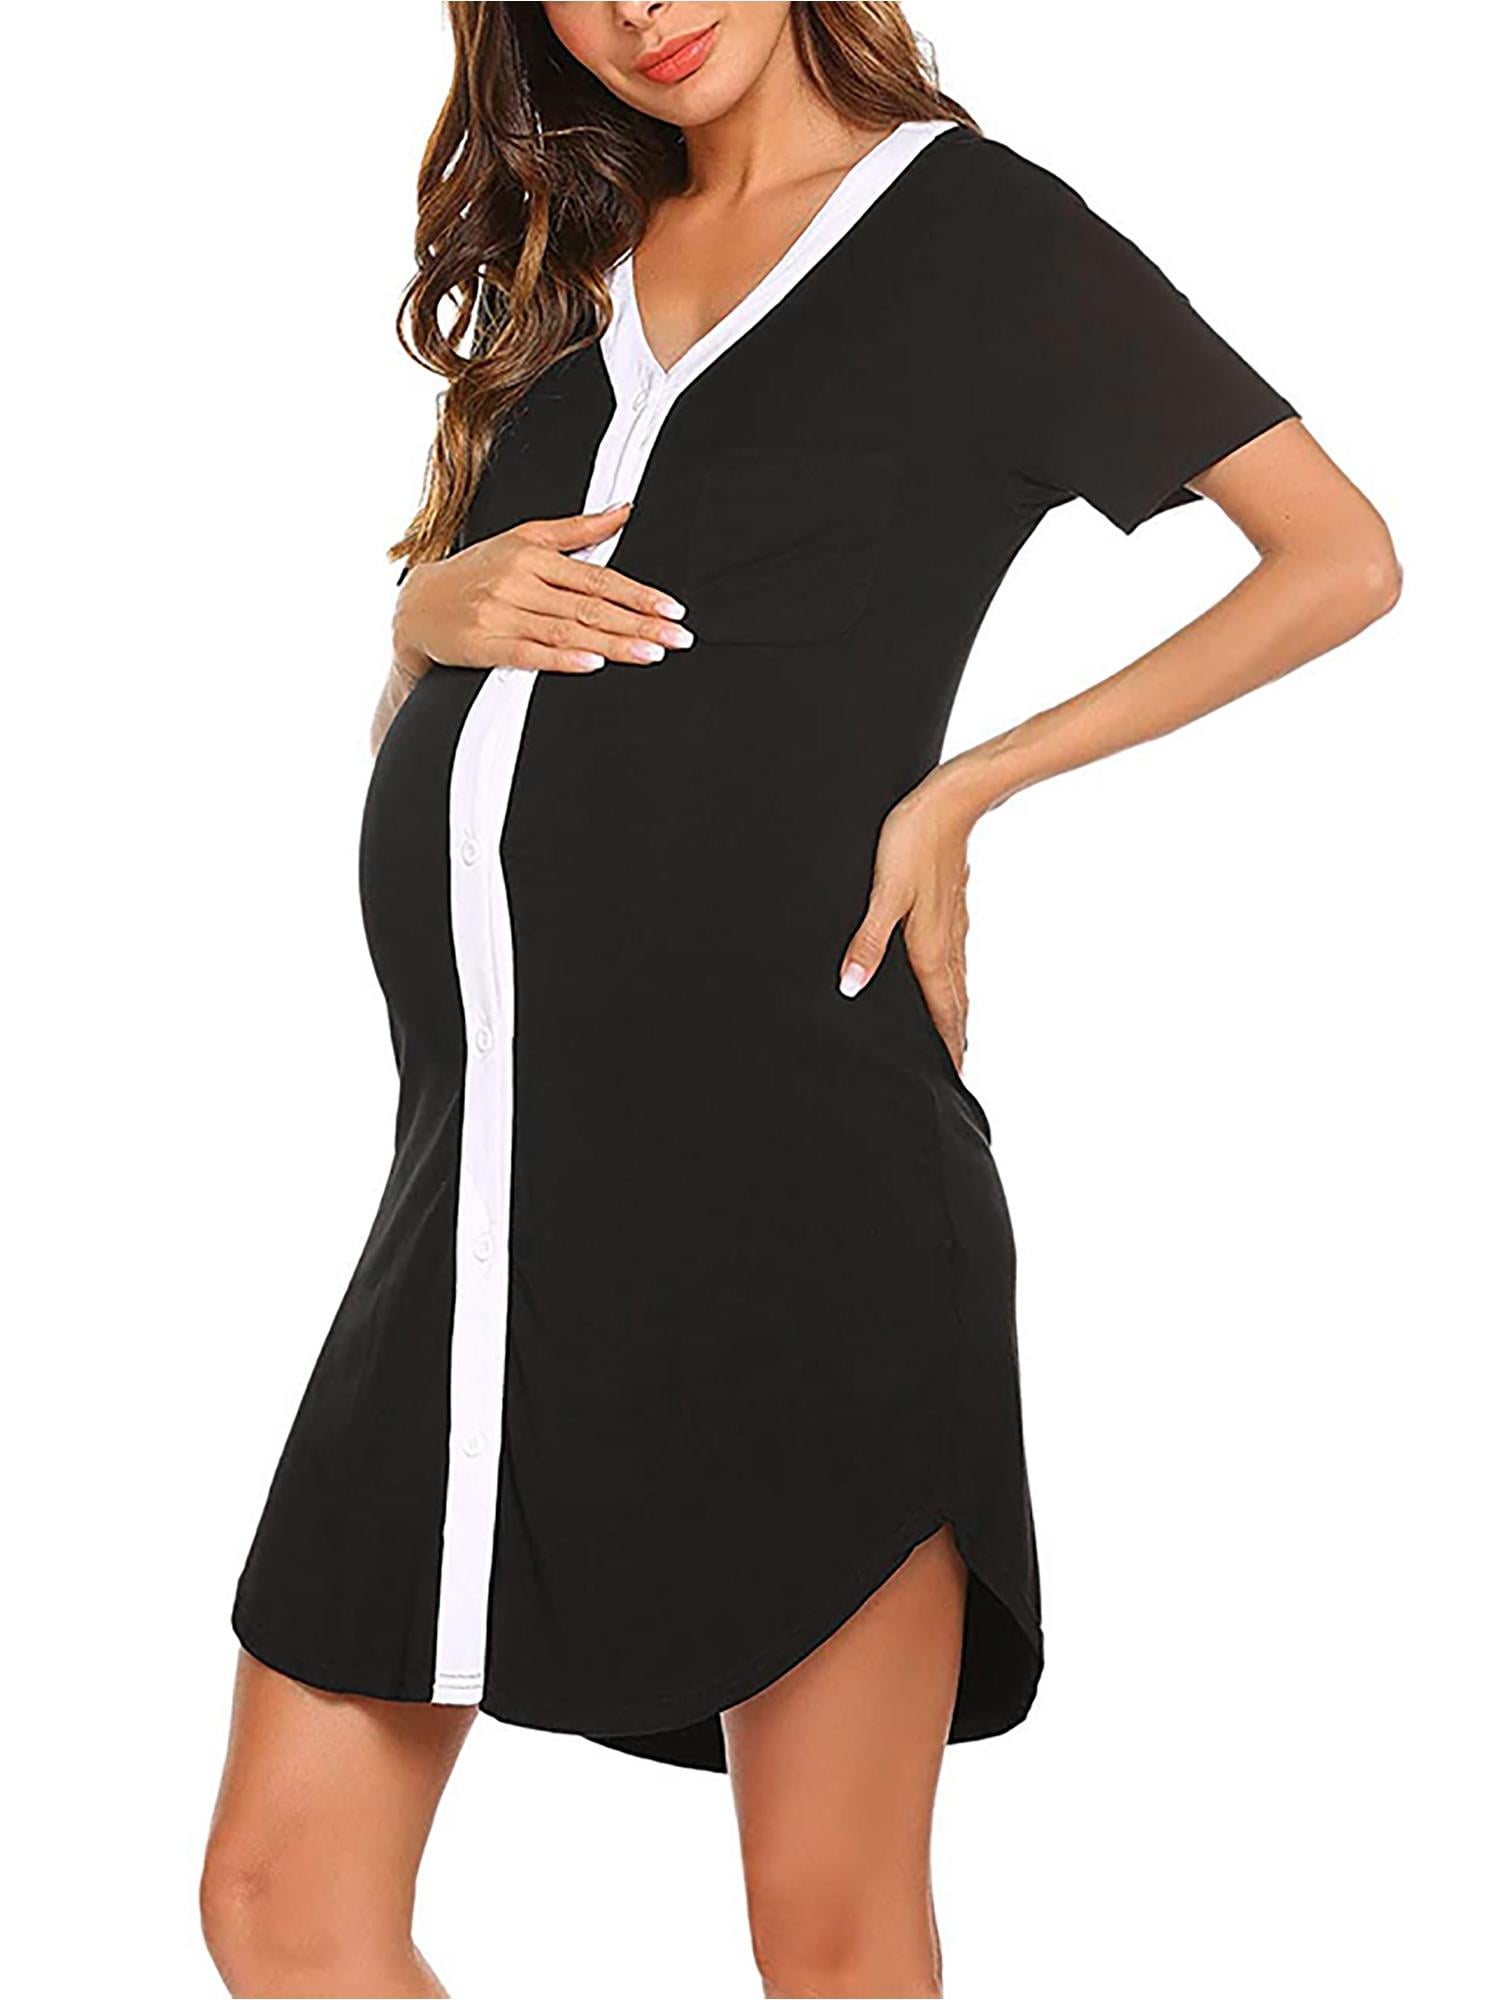 XXL L XL Central Chic Maternity Breastfeeding Nursing Dresses in M 